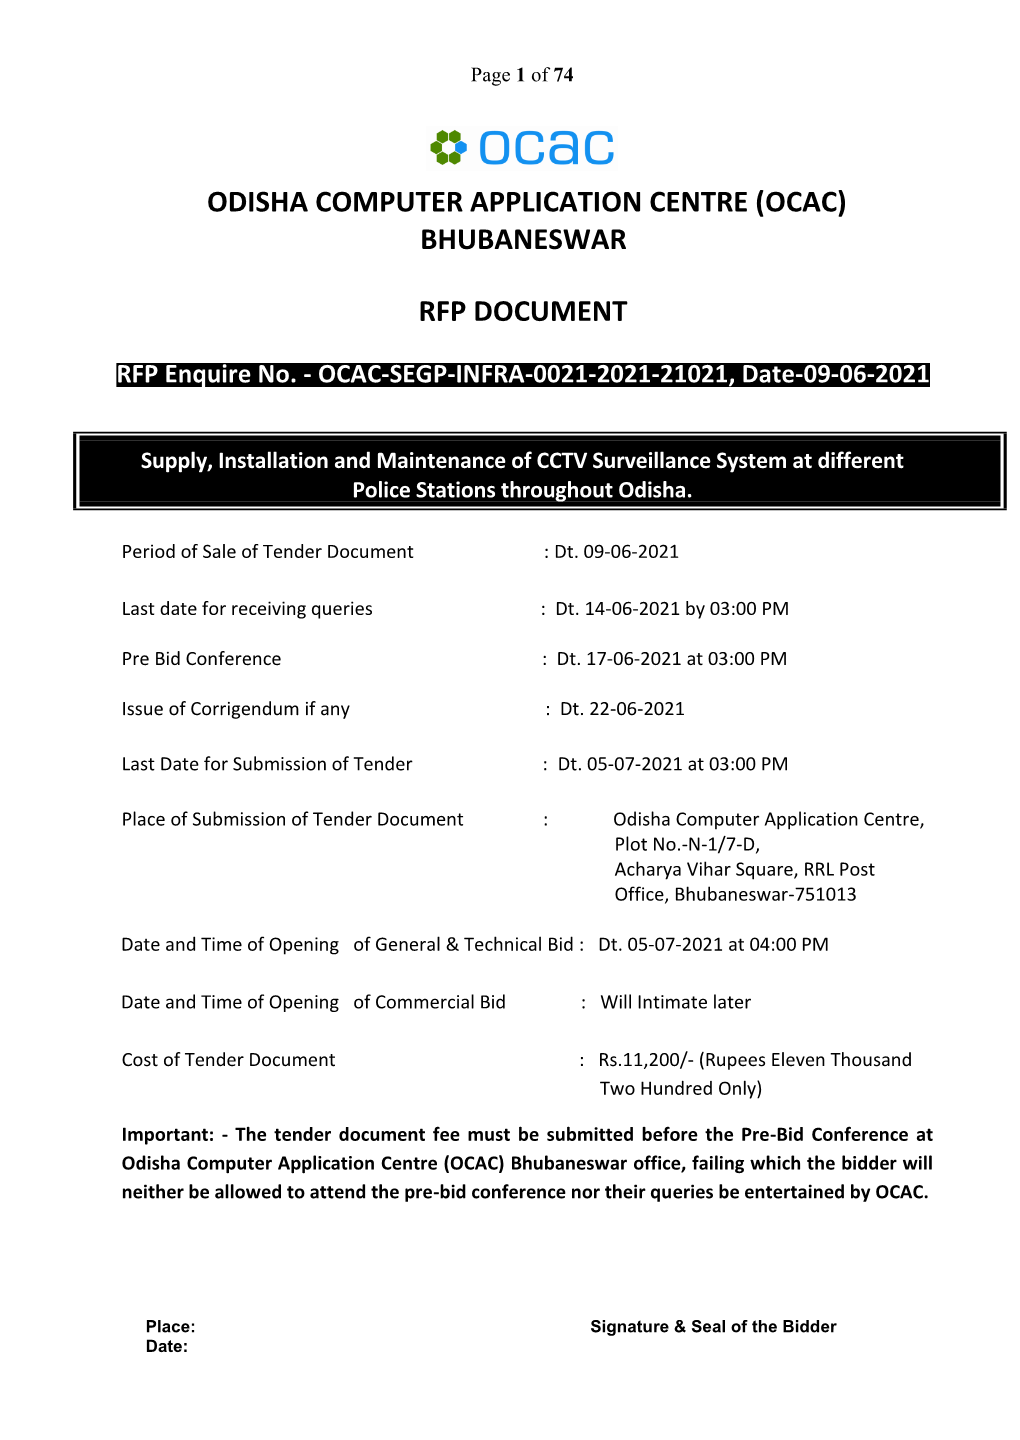 Bhubaneswar Rfp Document